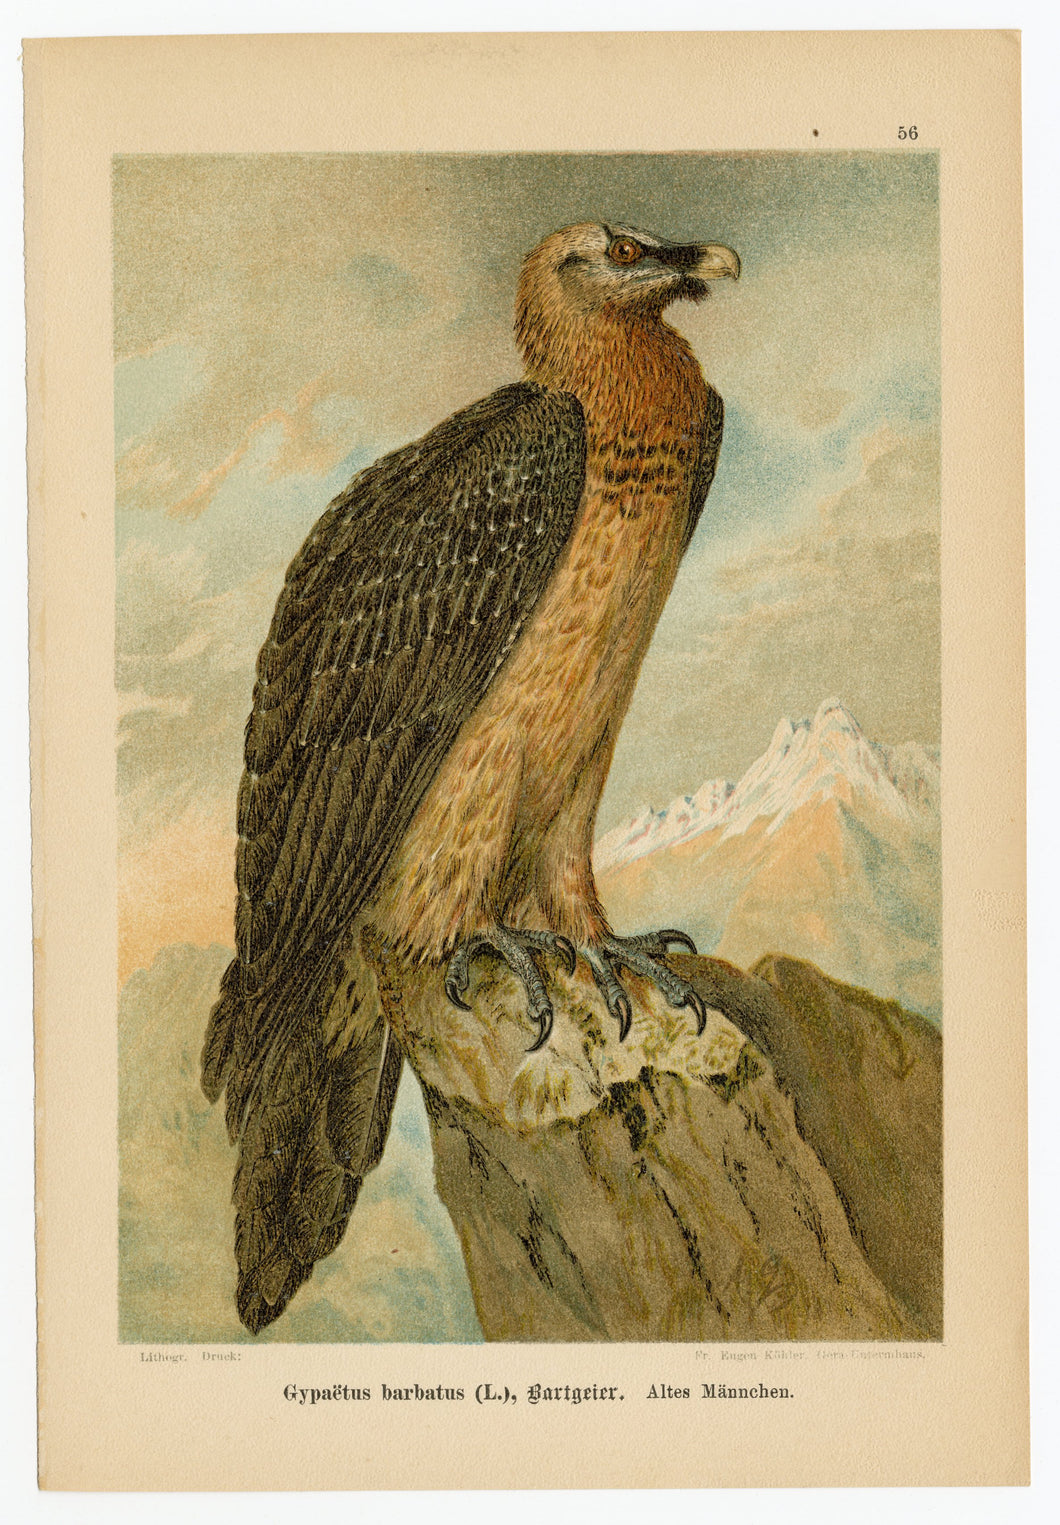 1905 Antique Scientific Lithographic Print || Bearded Vulture, Bird